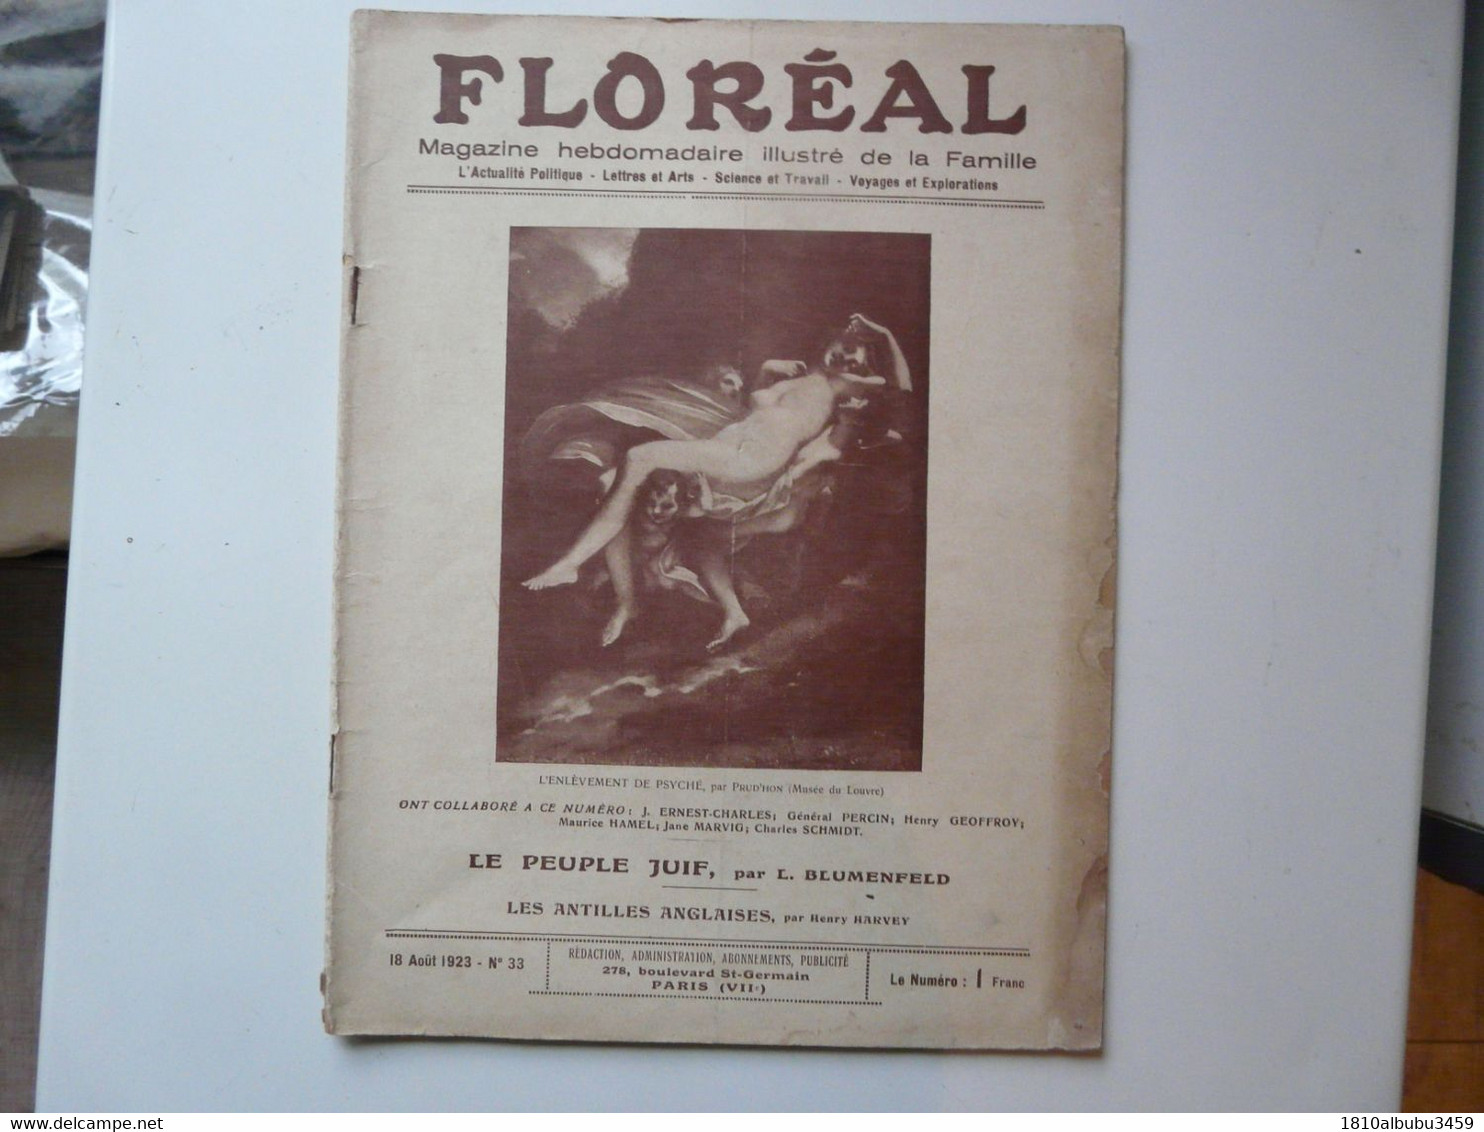 FLOREAL - MAGAZINE HEBDOMADAIRE ILLUSTRE DE LA FAMILLE 1923 - Soziologie